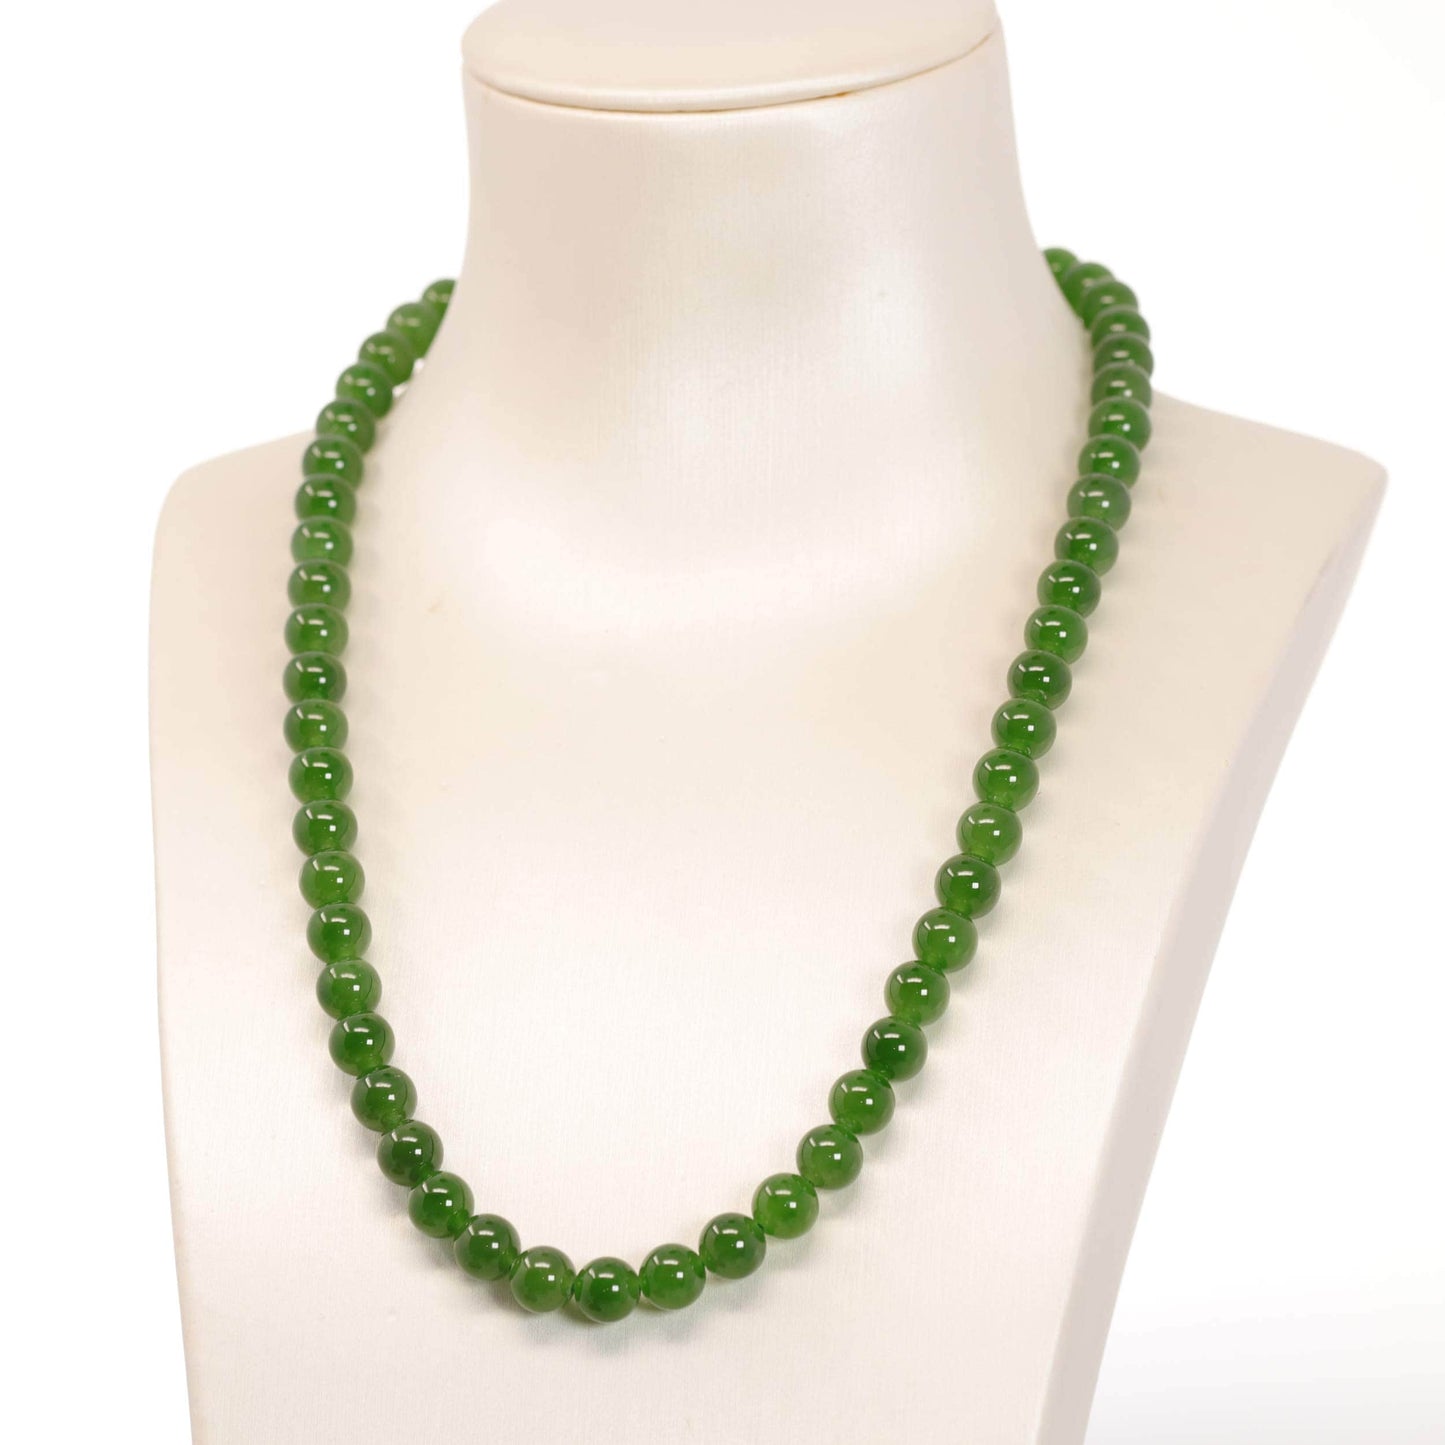 RealJade¨ Genuine High-quality Apple Green Nephrite Jade Round Beads Necklace ( 6mm )